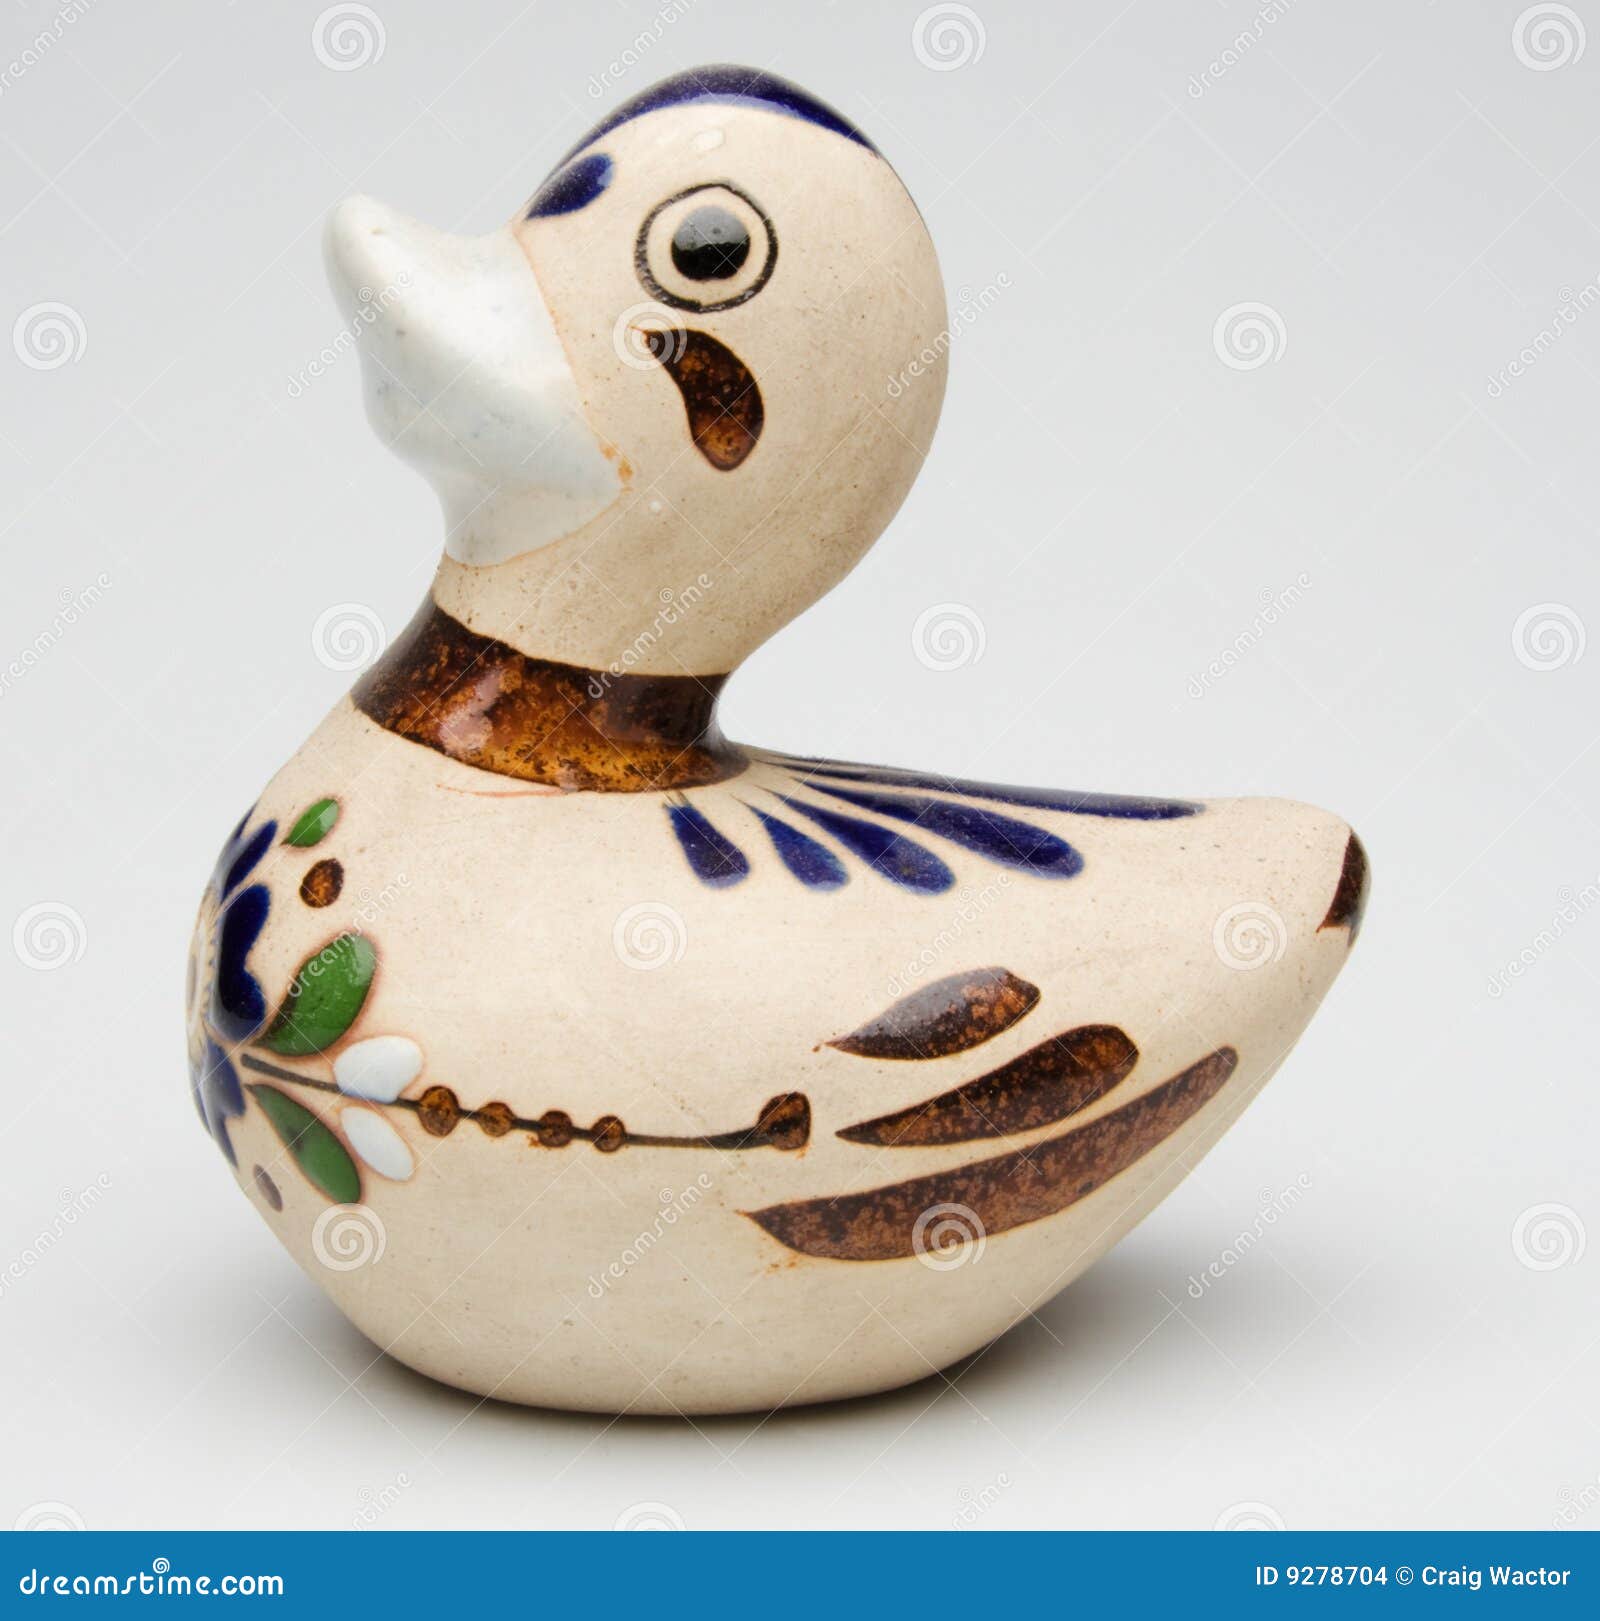 Vintage Hand Painted Duck Ceramic Duck Statuary Knick Knacks Home